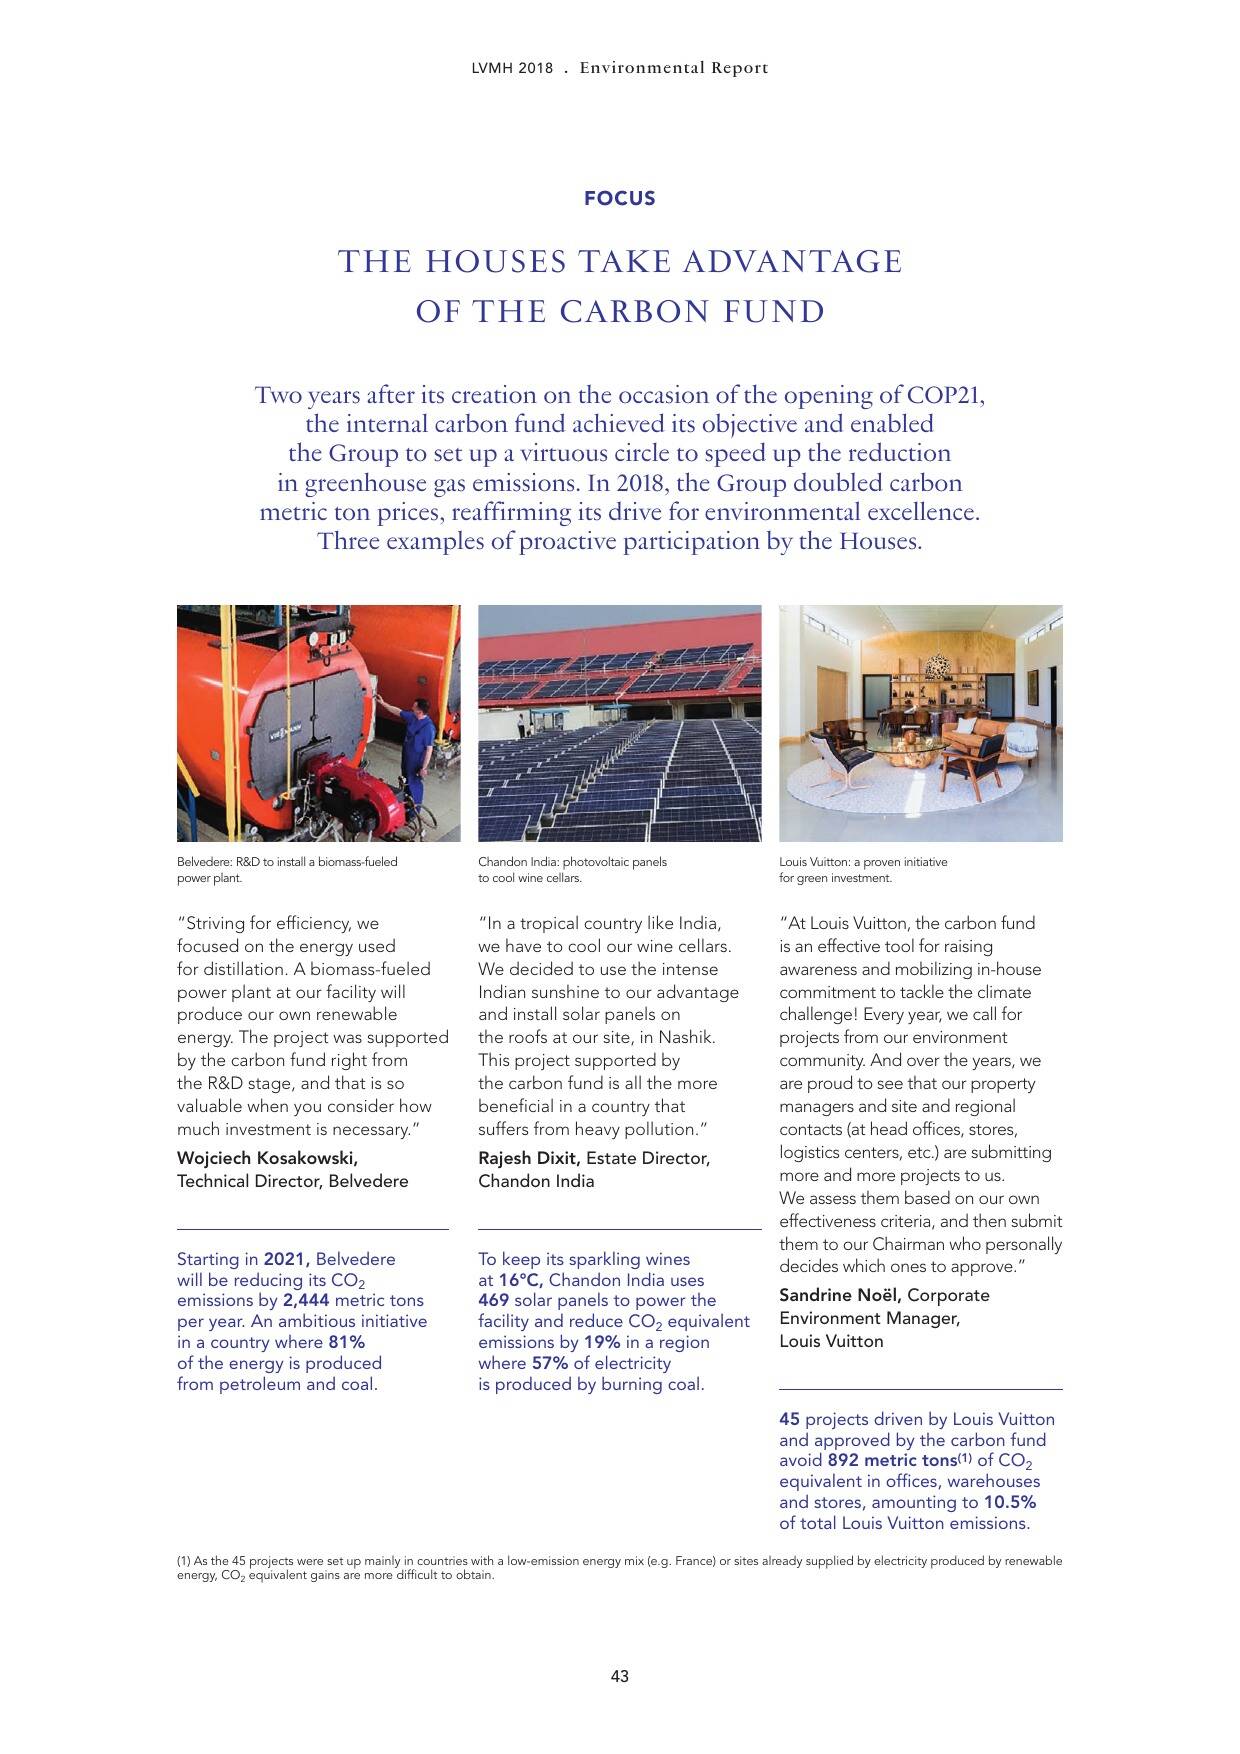 lvmh carbon fund